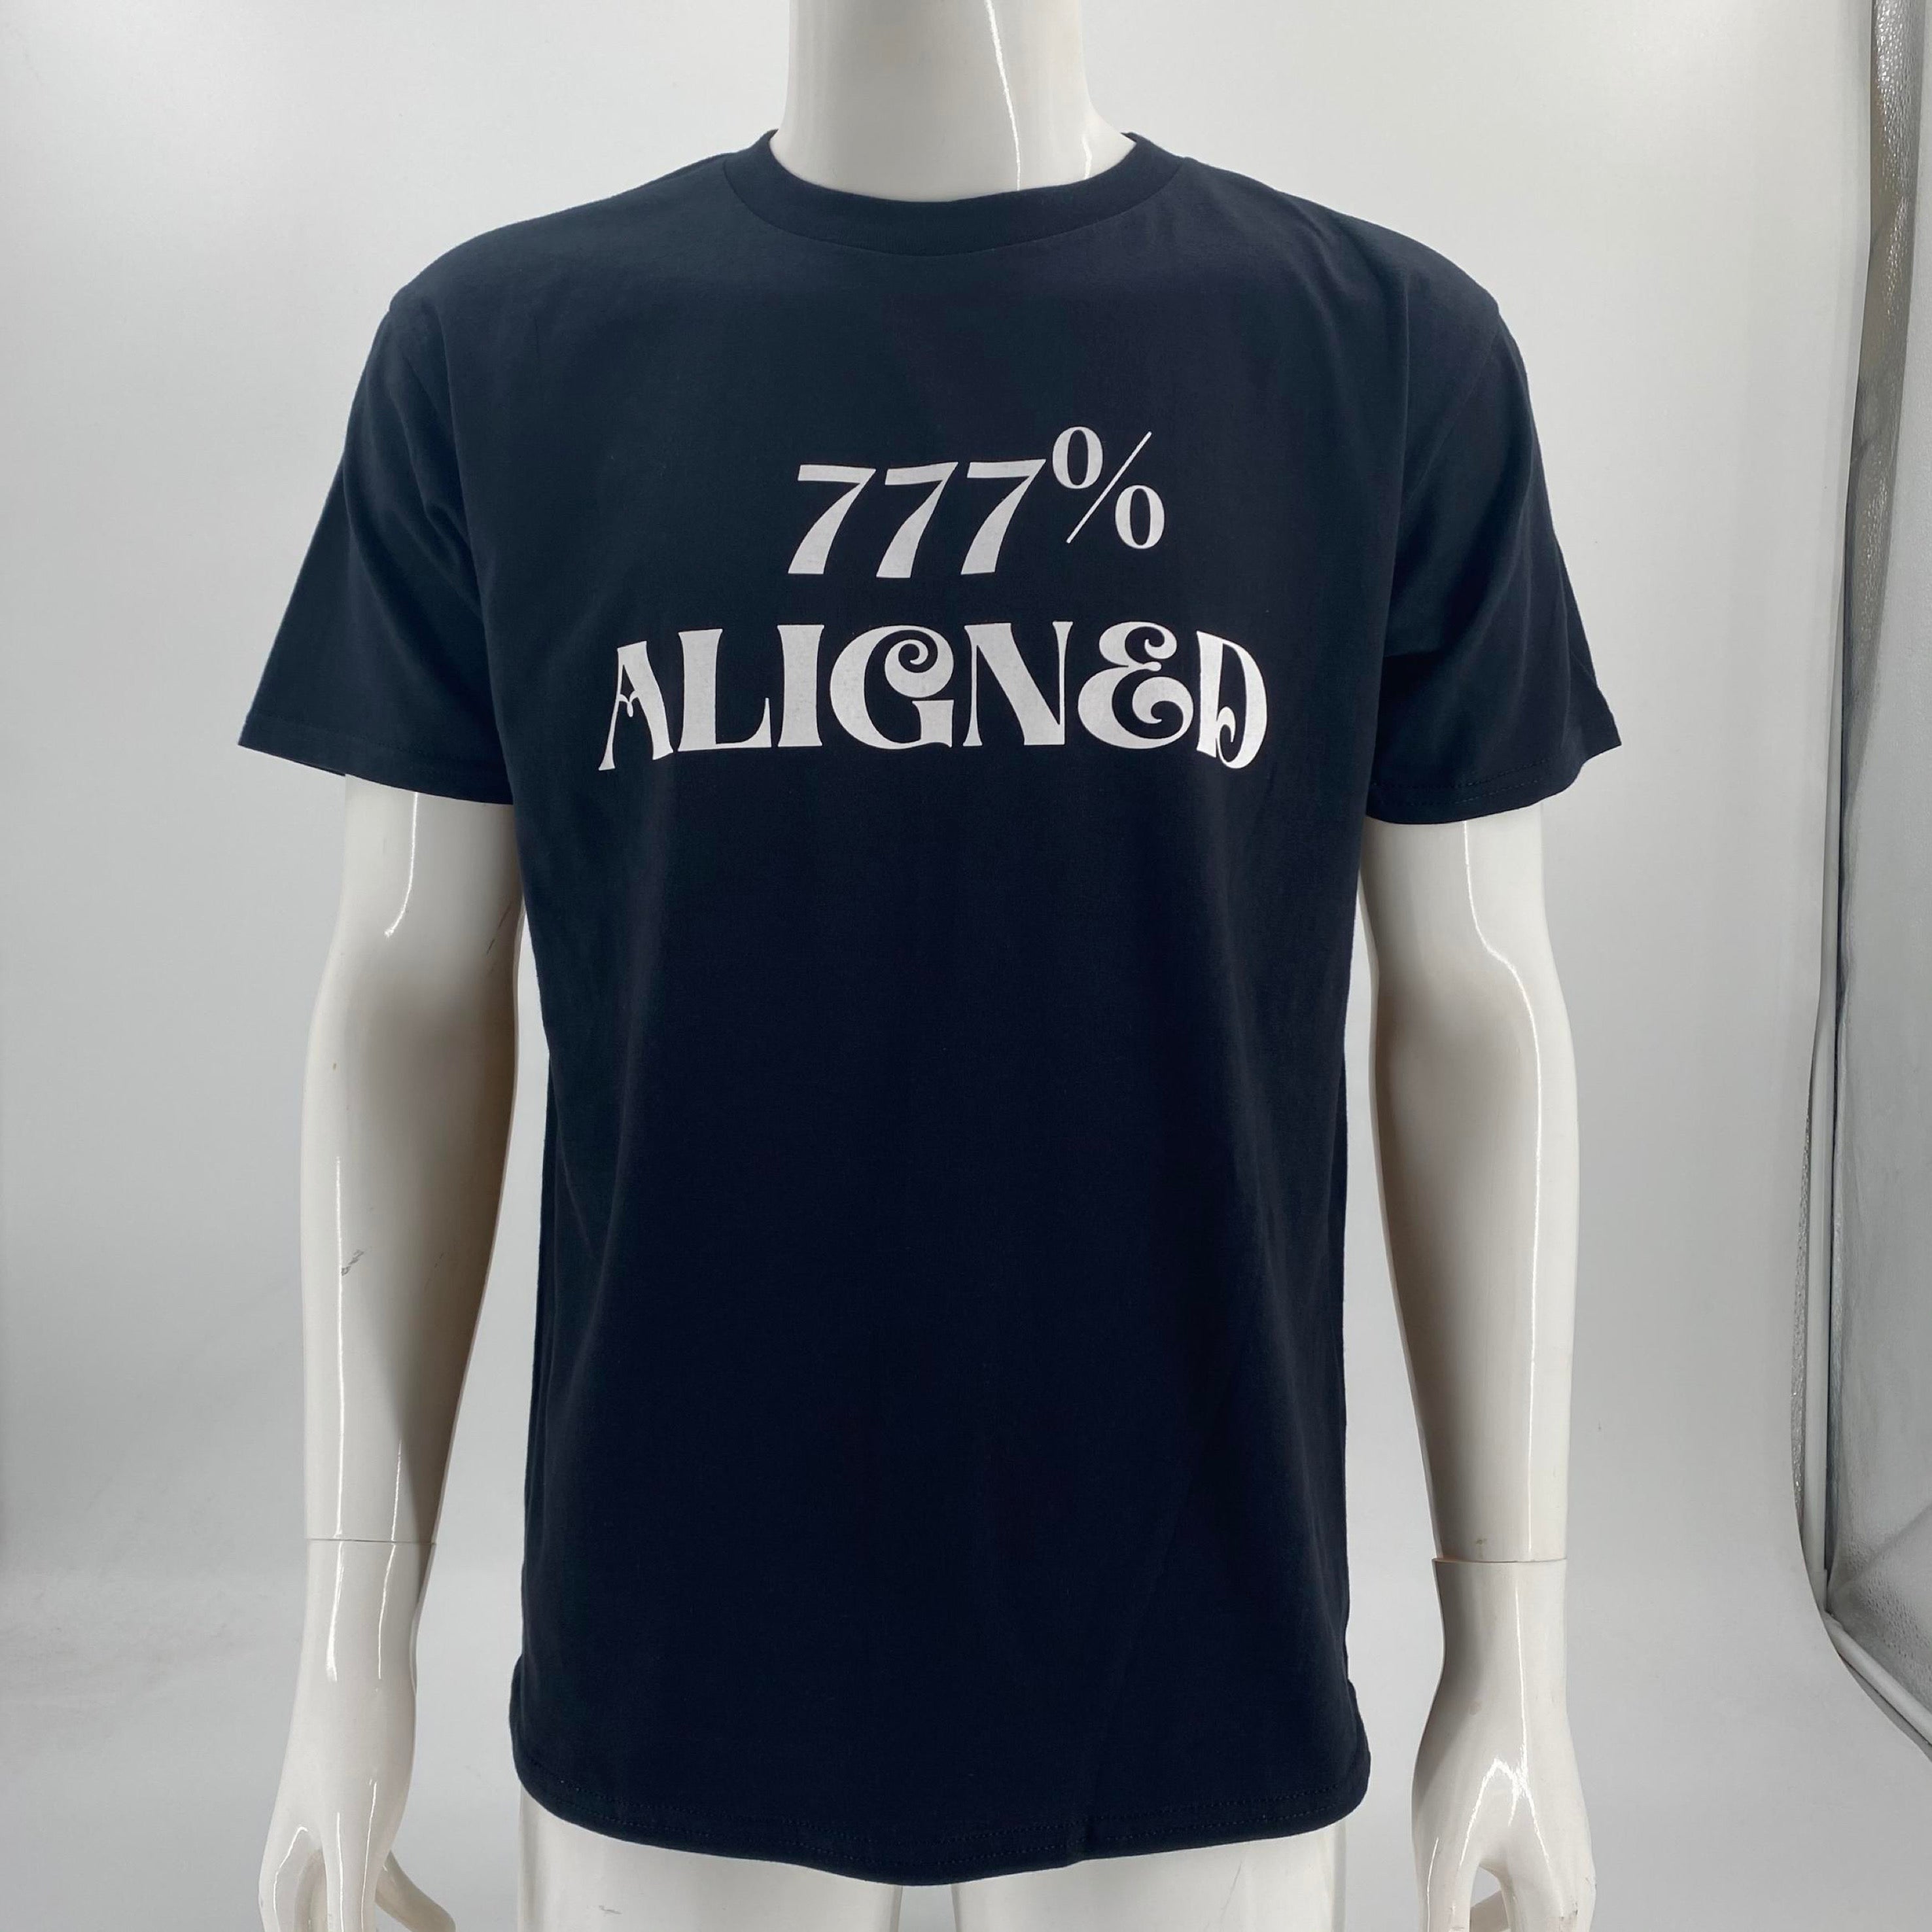 Mens 777% aligned black t shirts